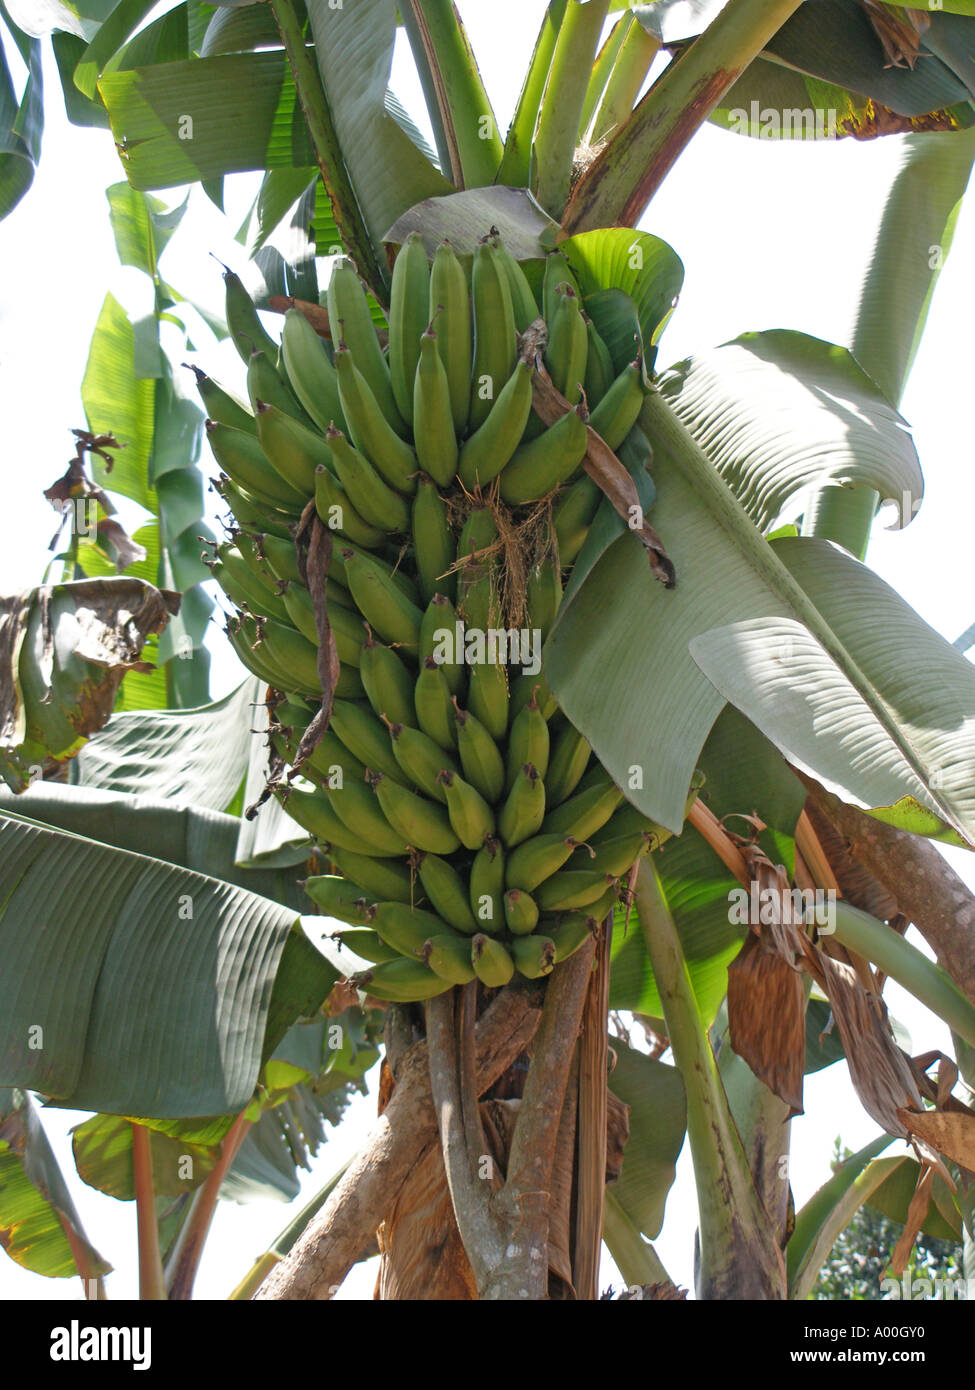 Plantain bunch (matooke), staple diet in southern Uganda Stock Photo